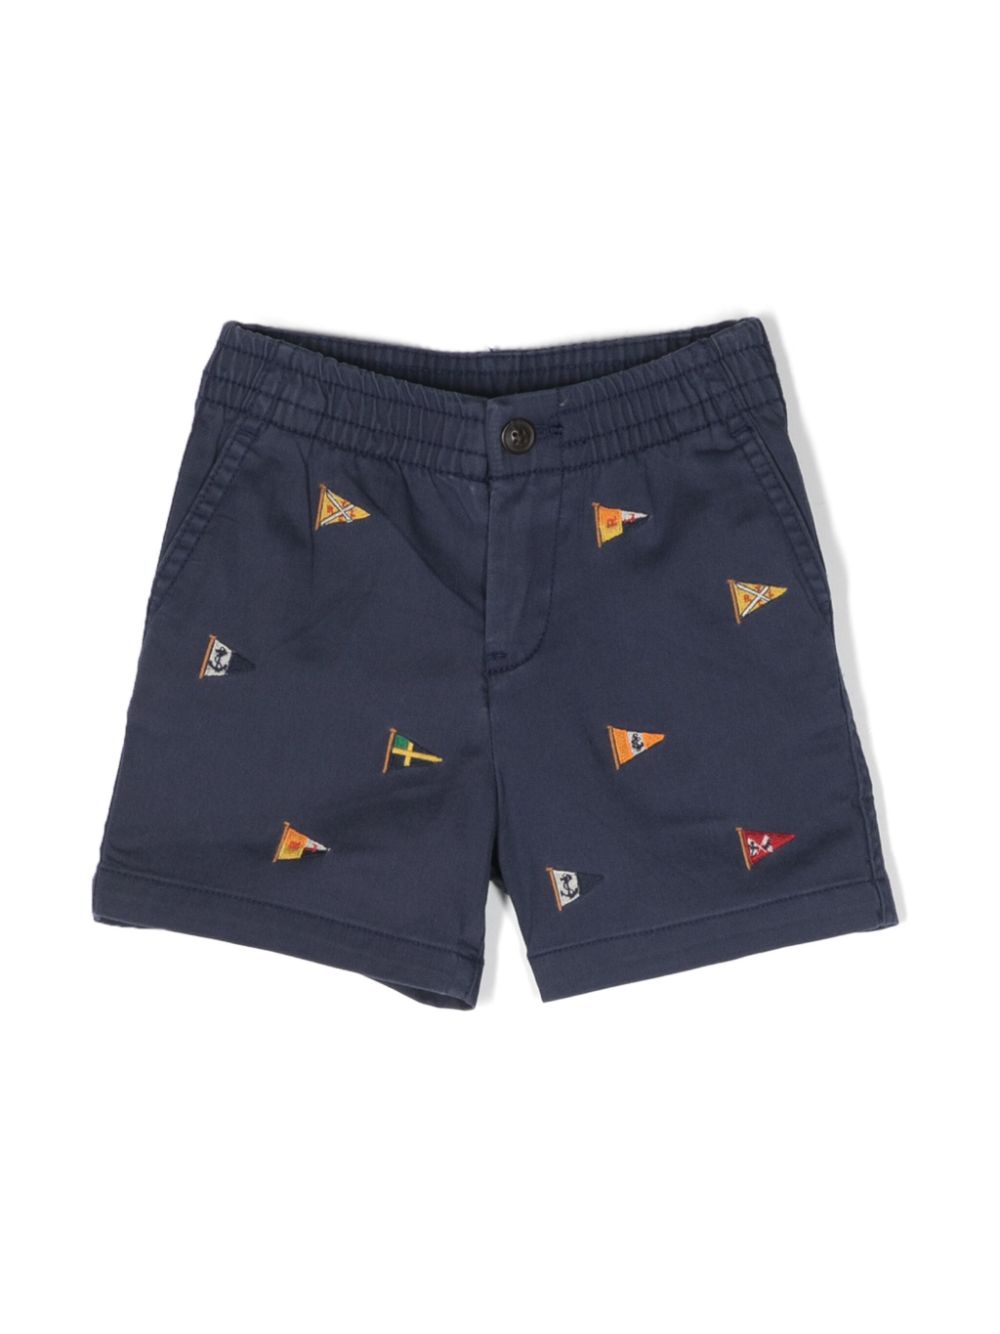 Blue Bermuda shorts for newborns